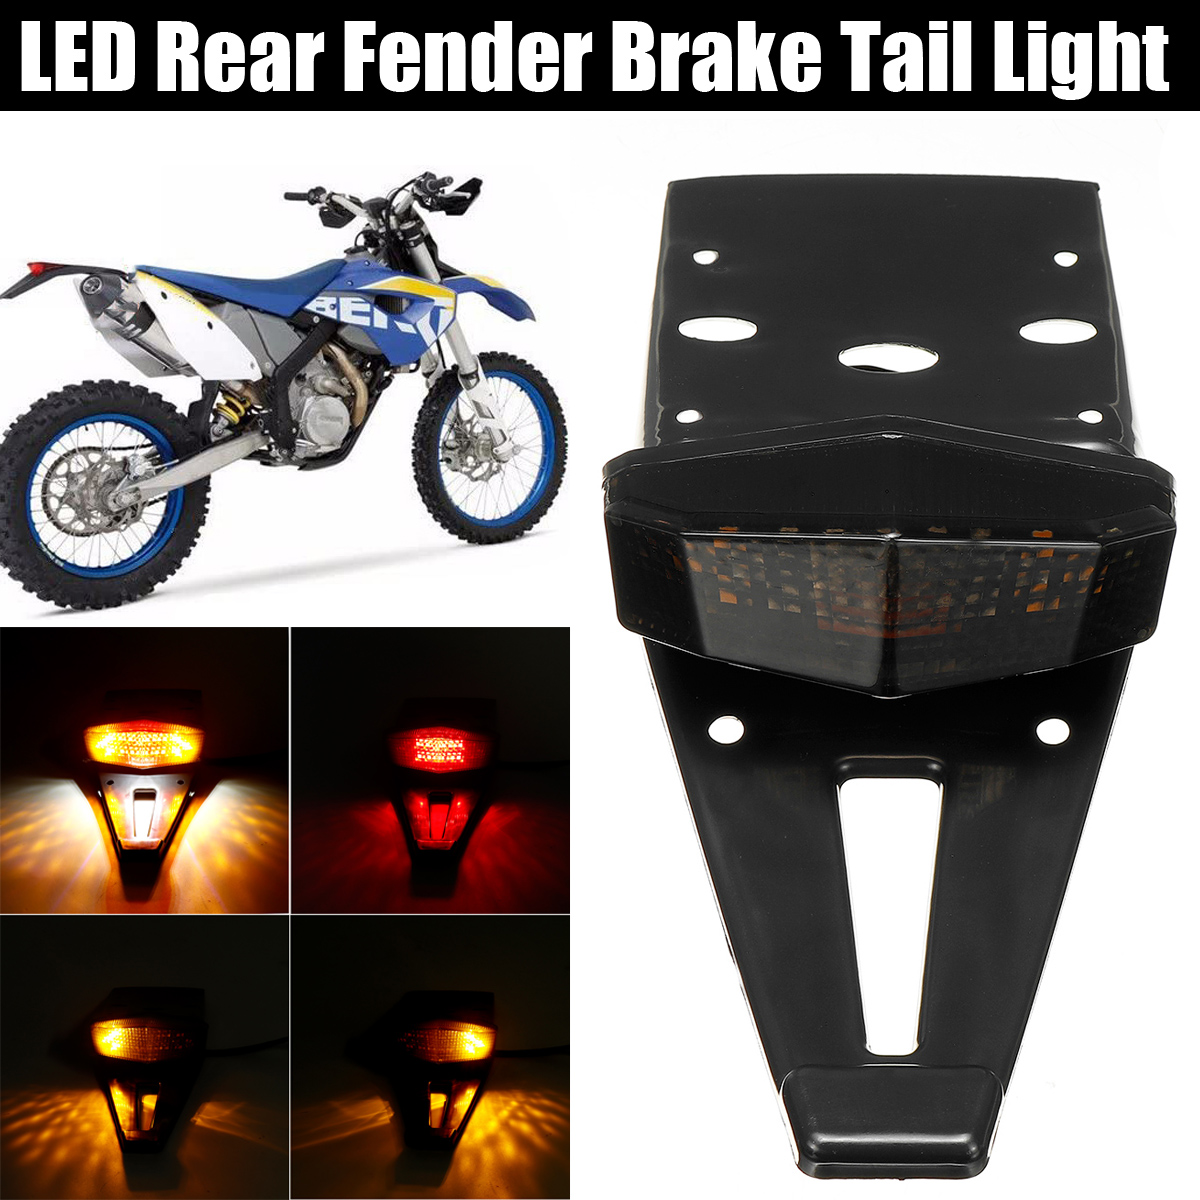 Motorcycle Rear Fender LED Brake Tail Light For Enduro Trial Bike XR400 Offroad